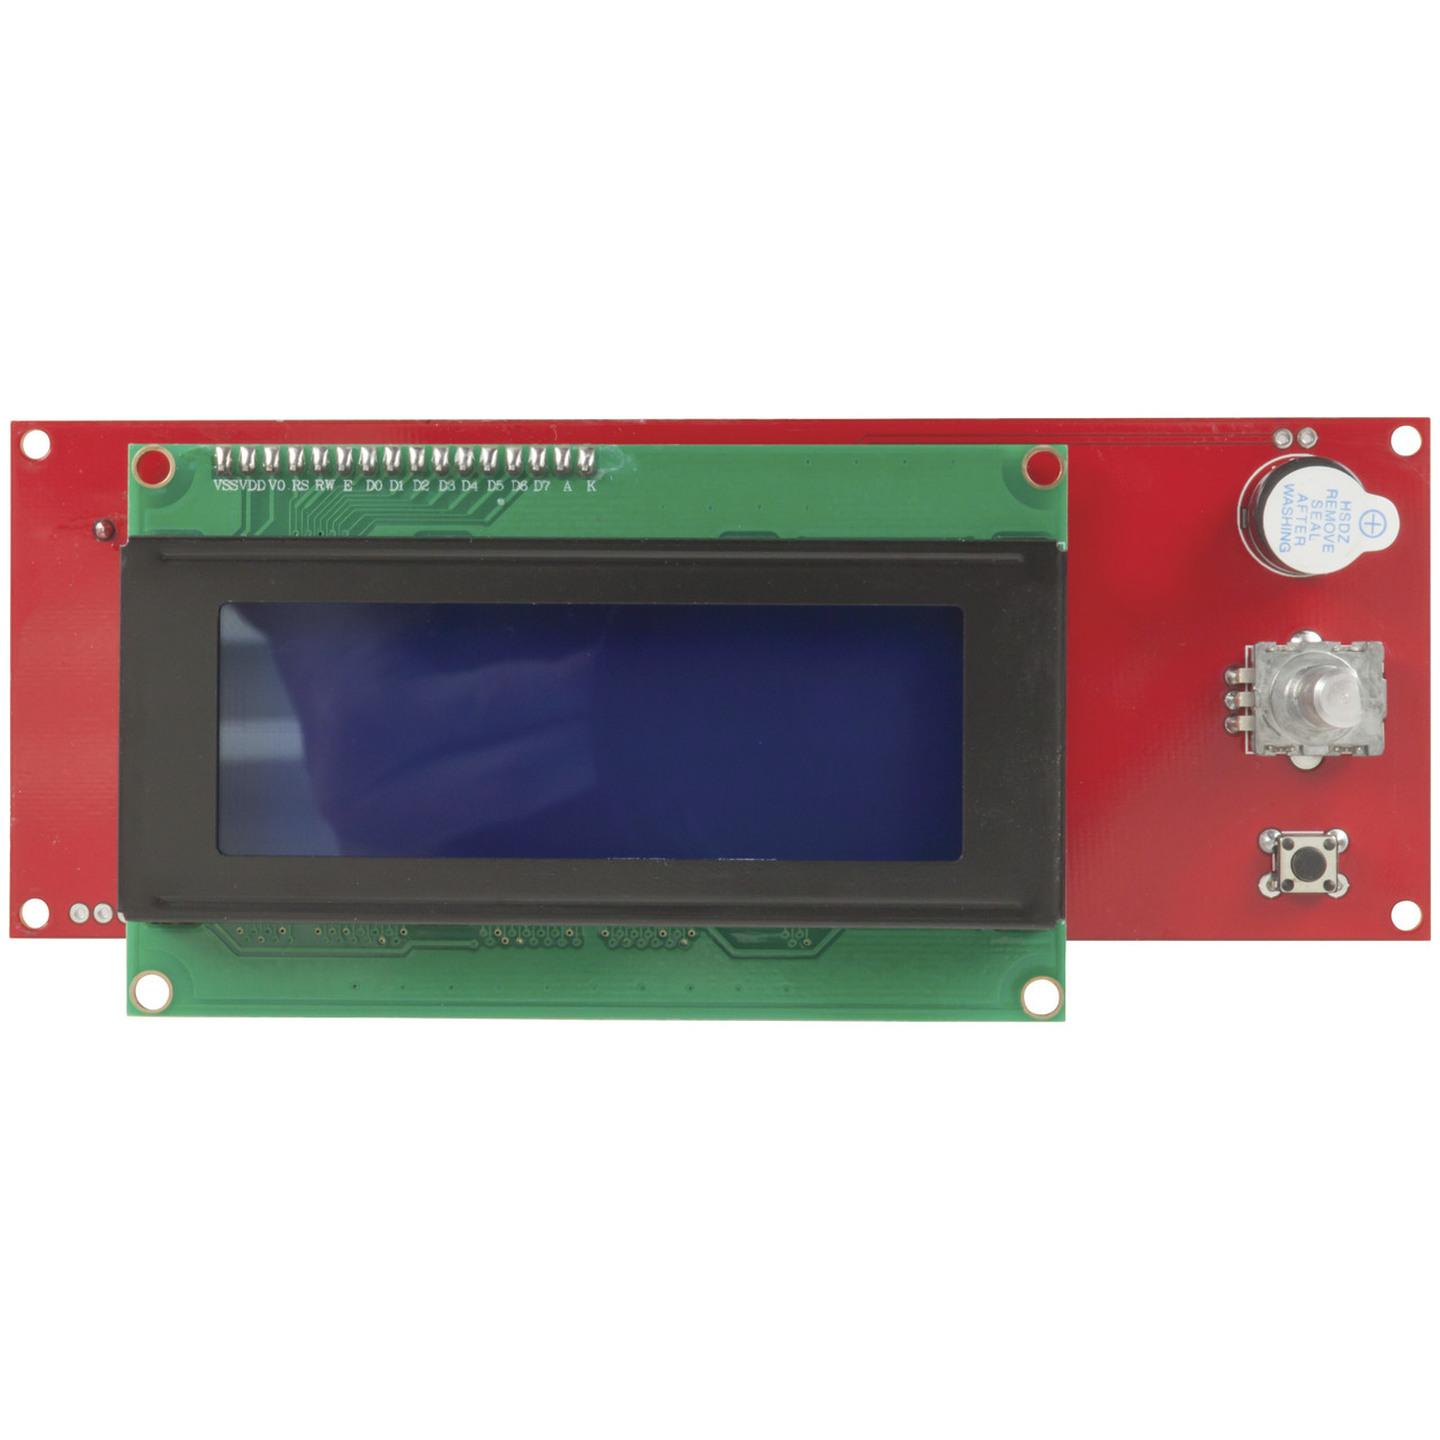 TL4100 Display and SD card module